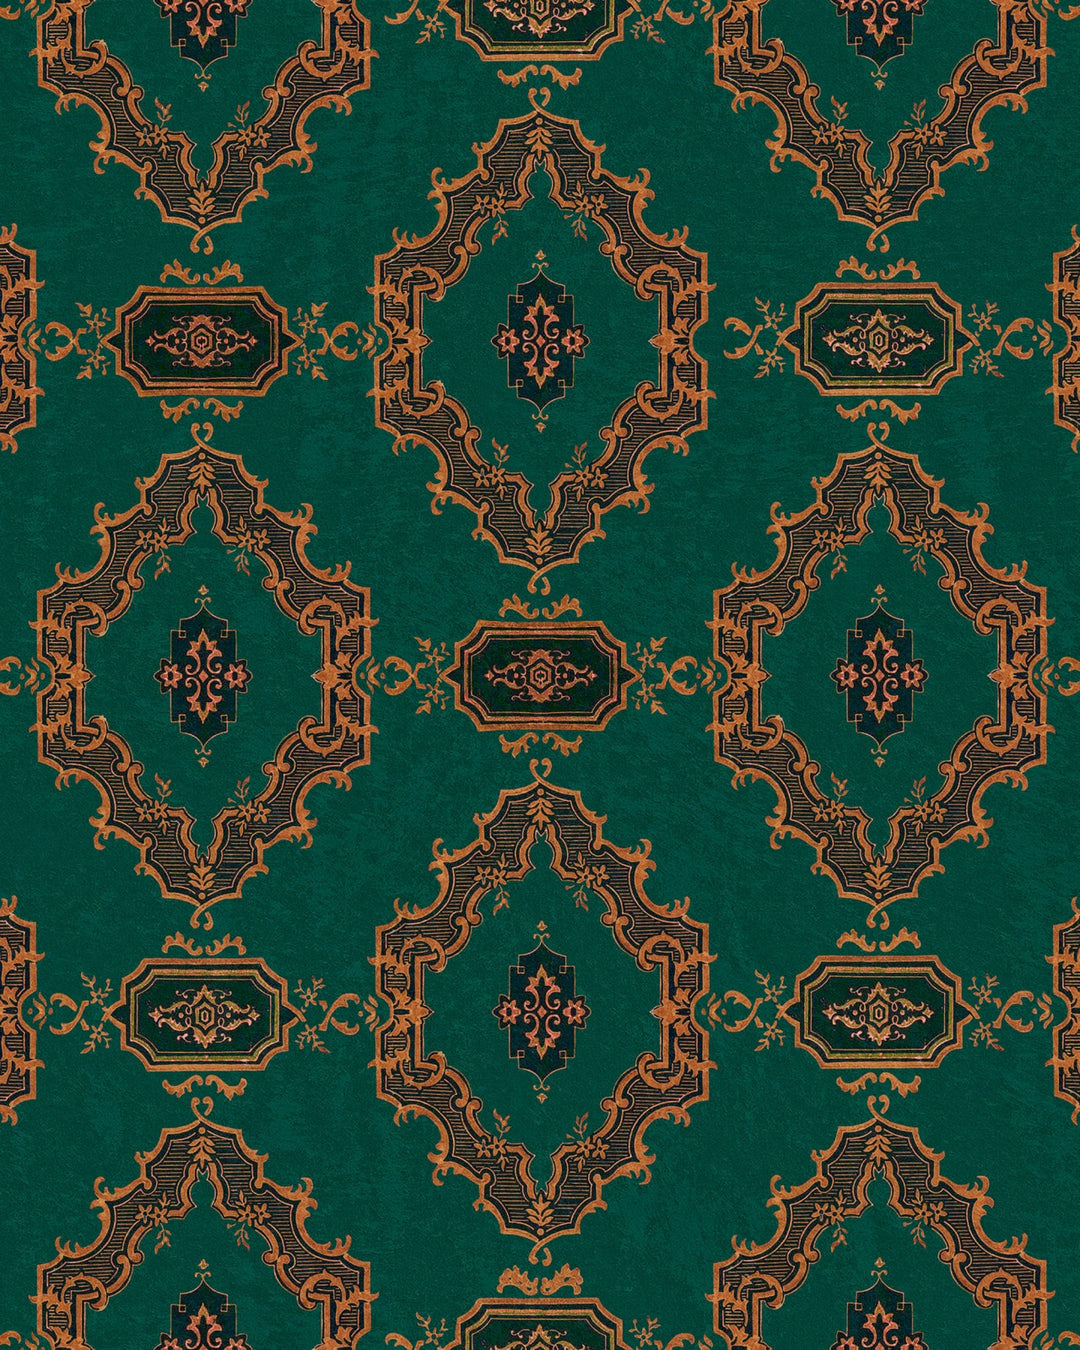 The Bar Tapestry Wallpaper